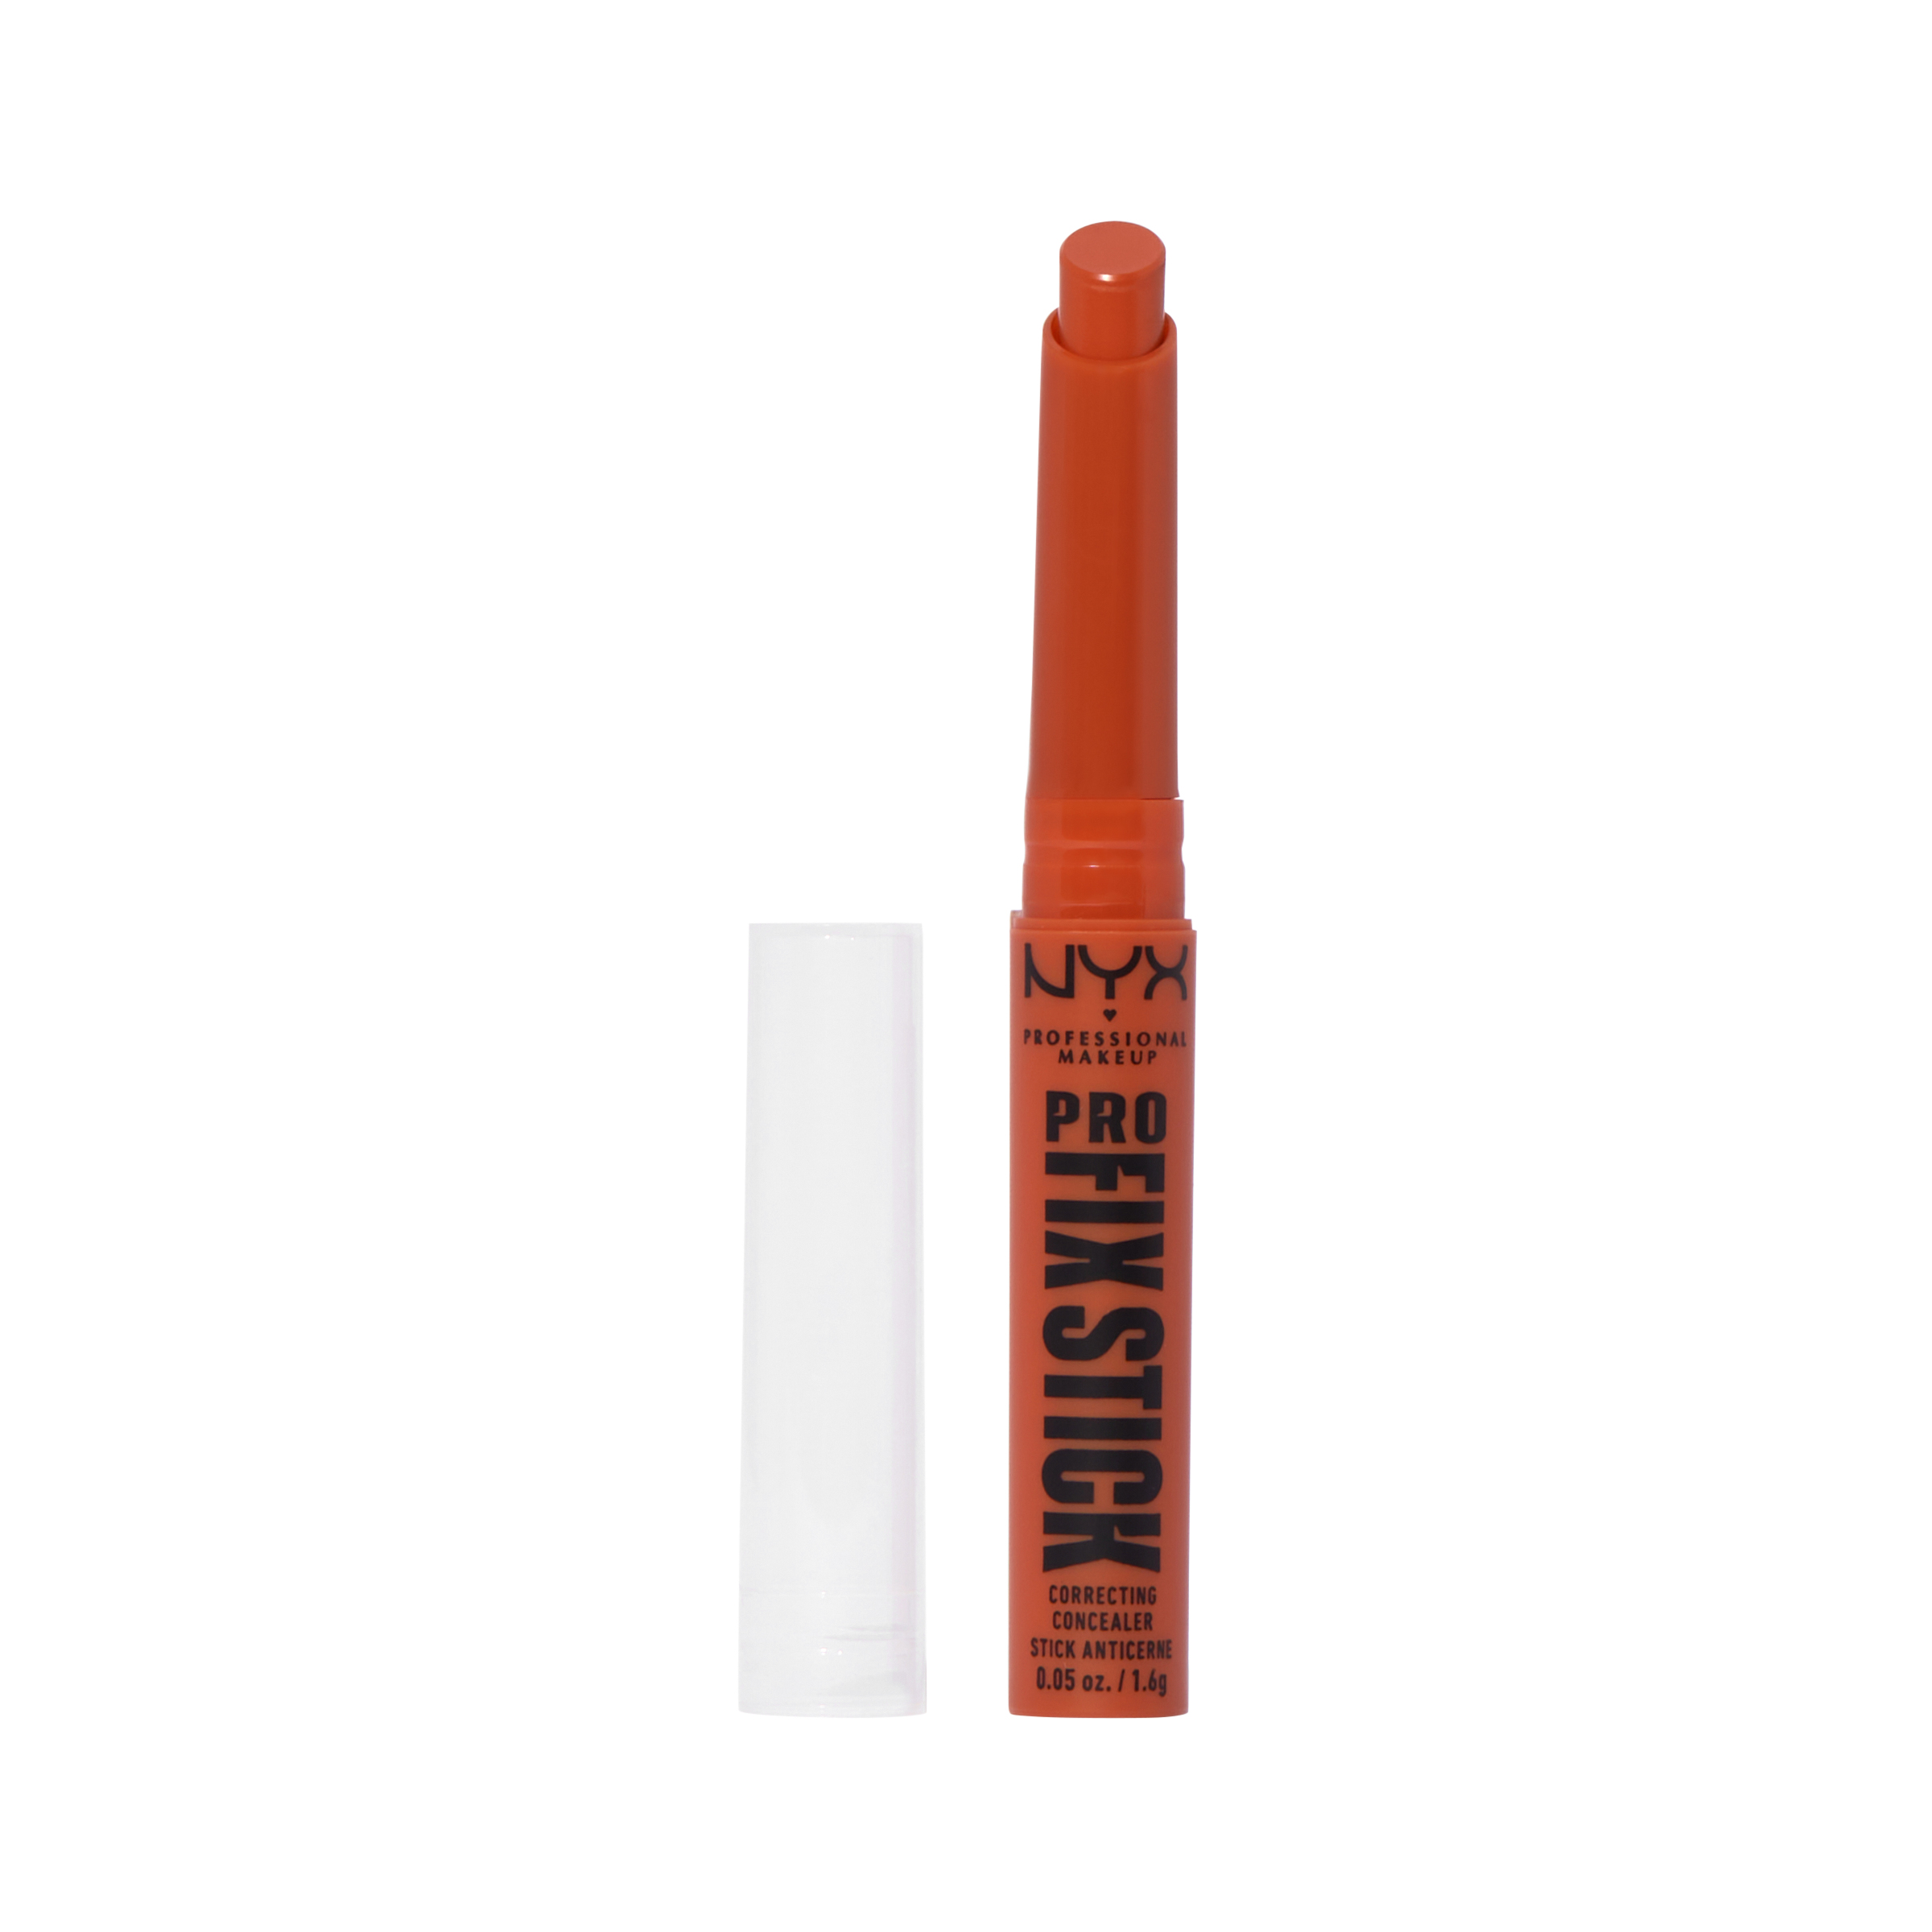 Pro Fix Stick Correcting Concealer Stick Apricot